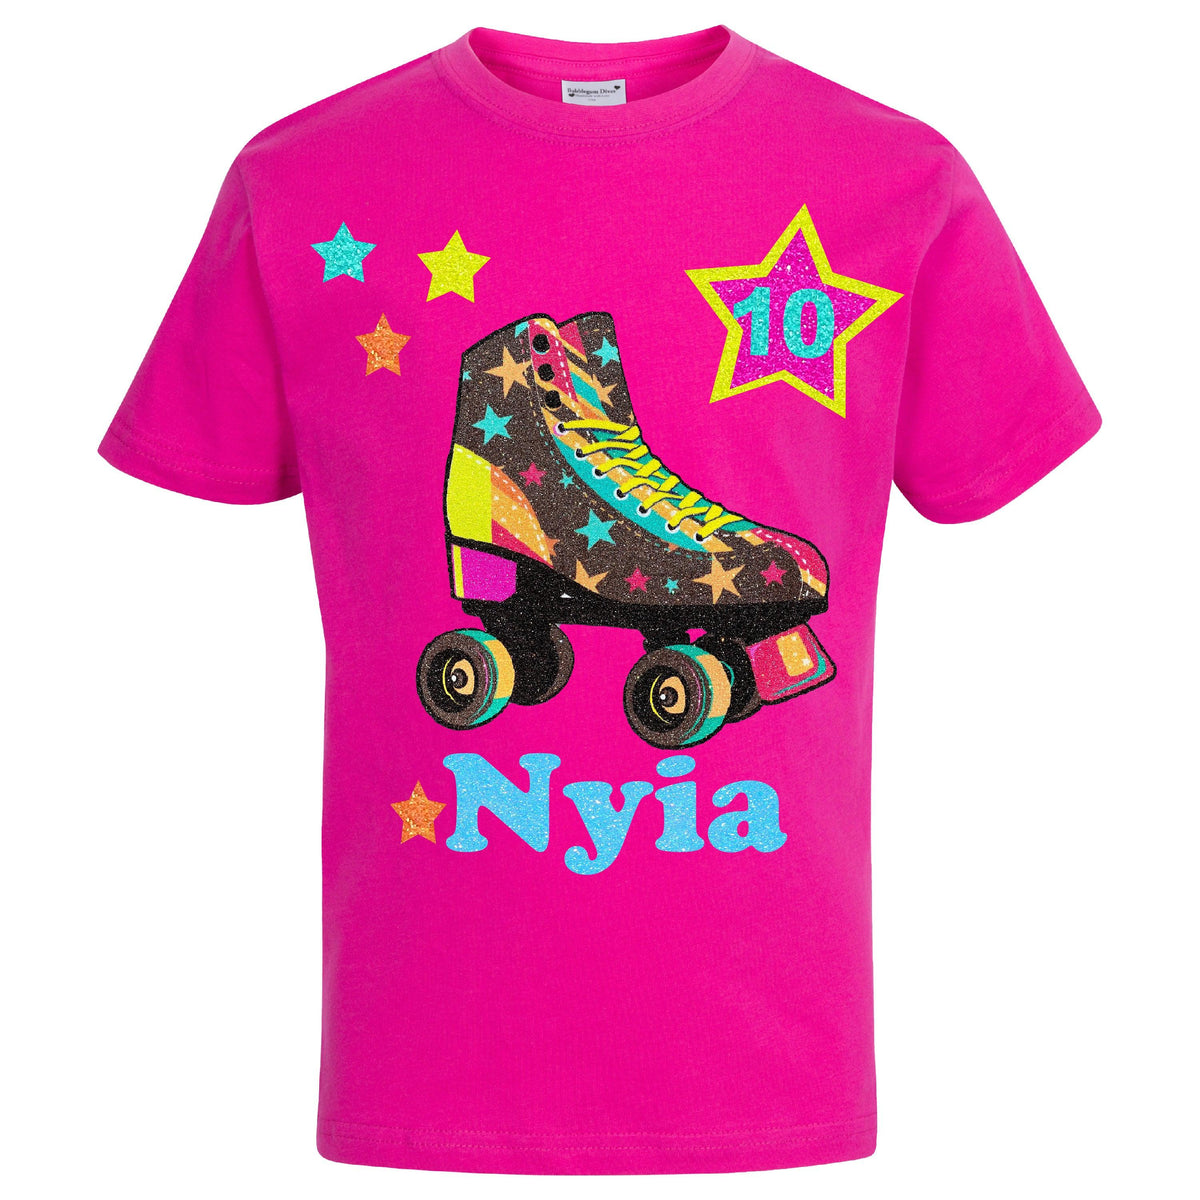 Foxy Brown 10th Birthday Roller Skate Shirt for Tween Girls